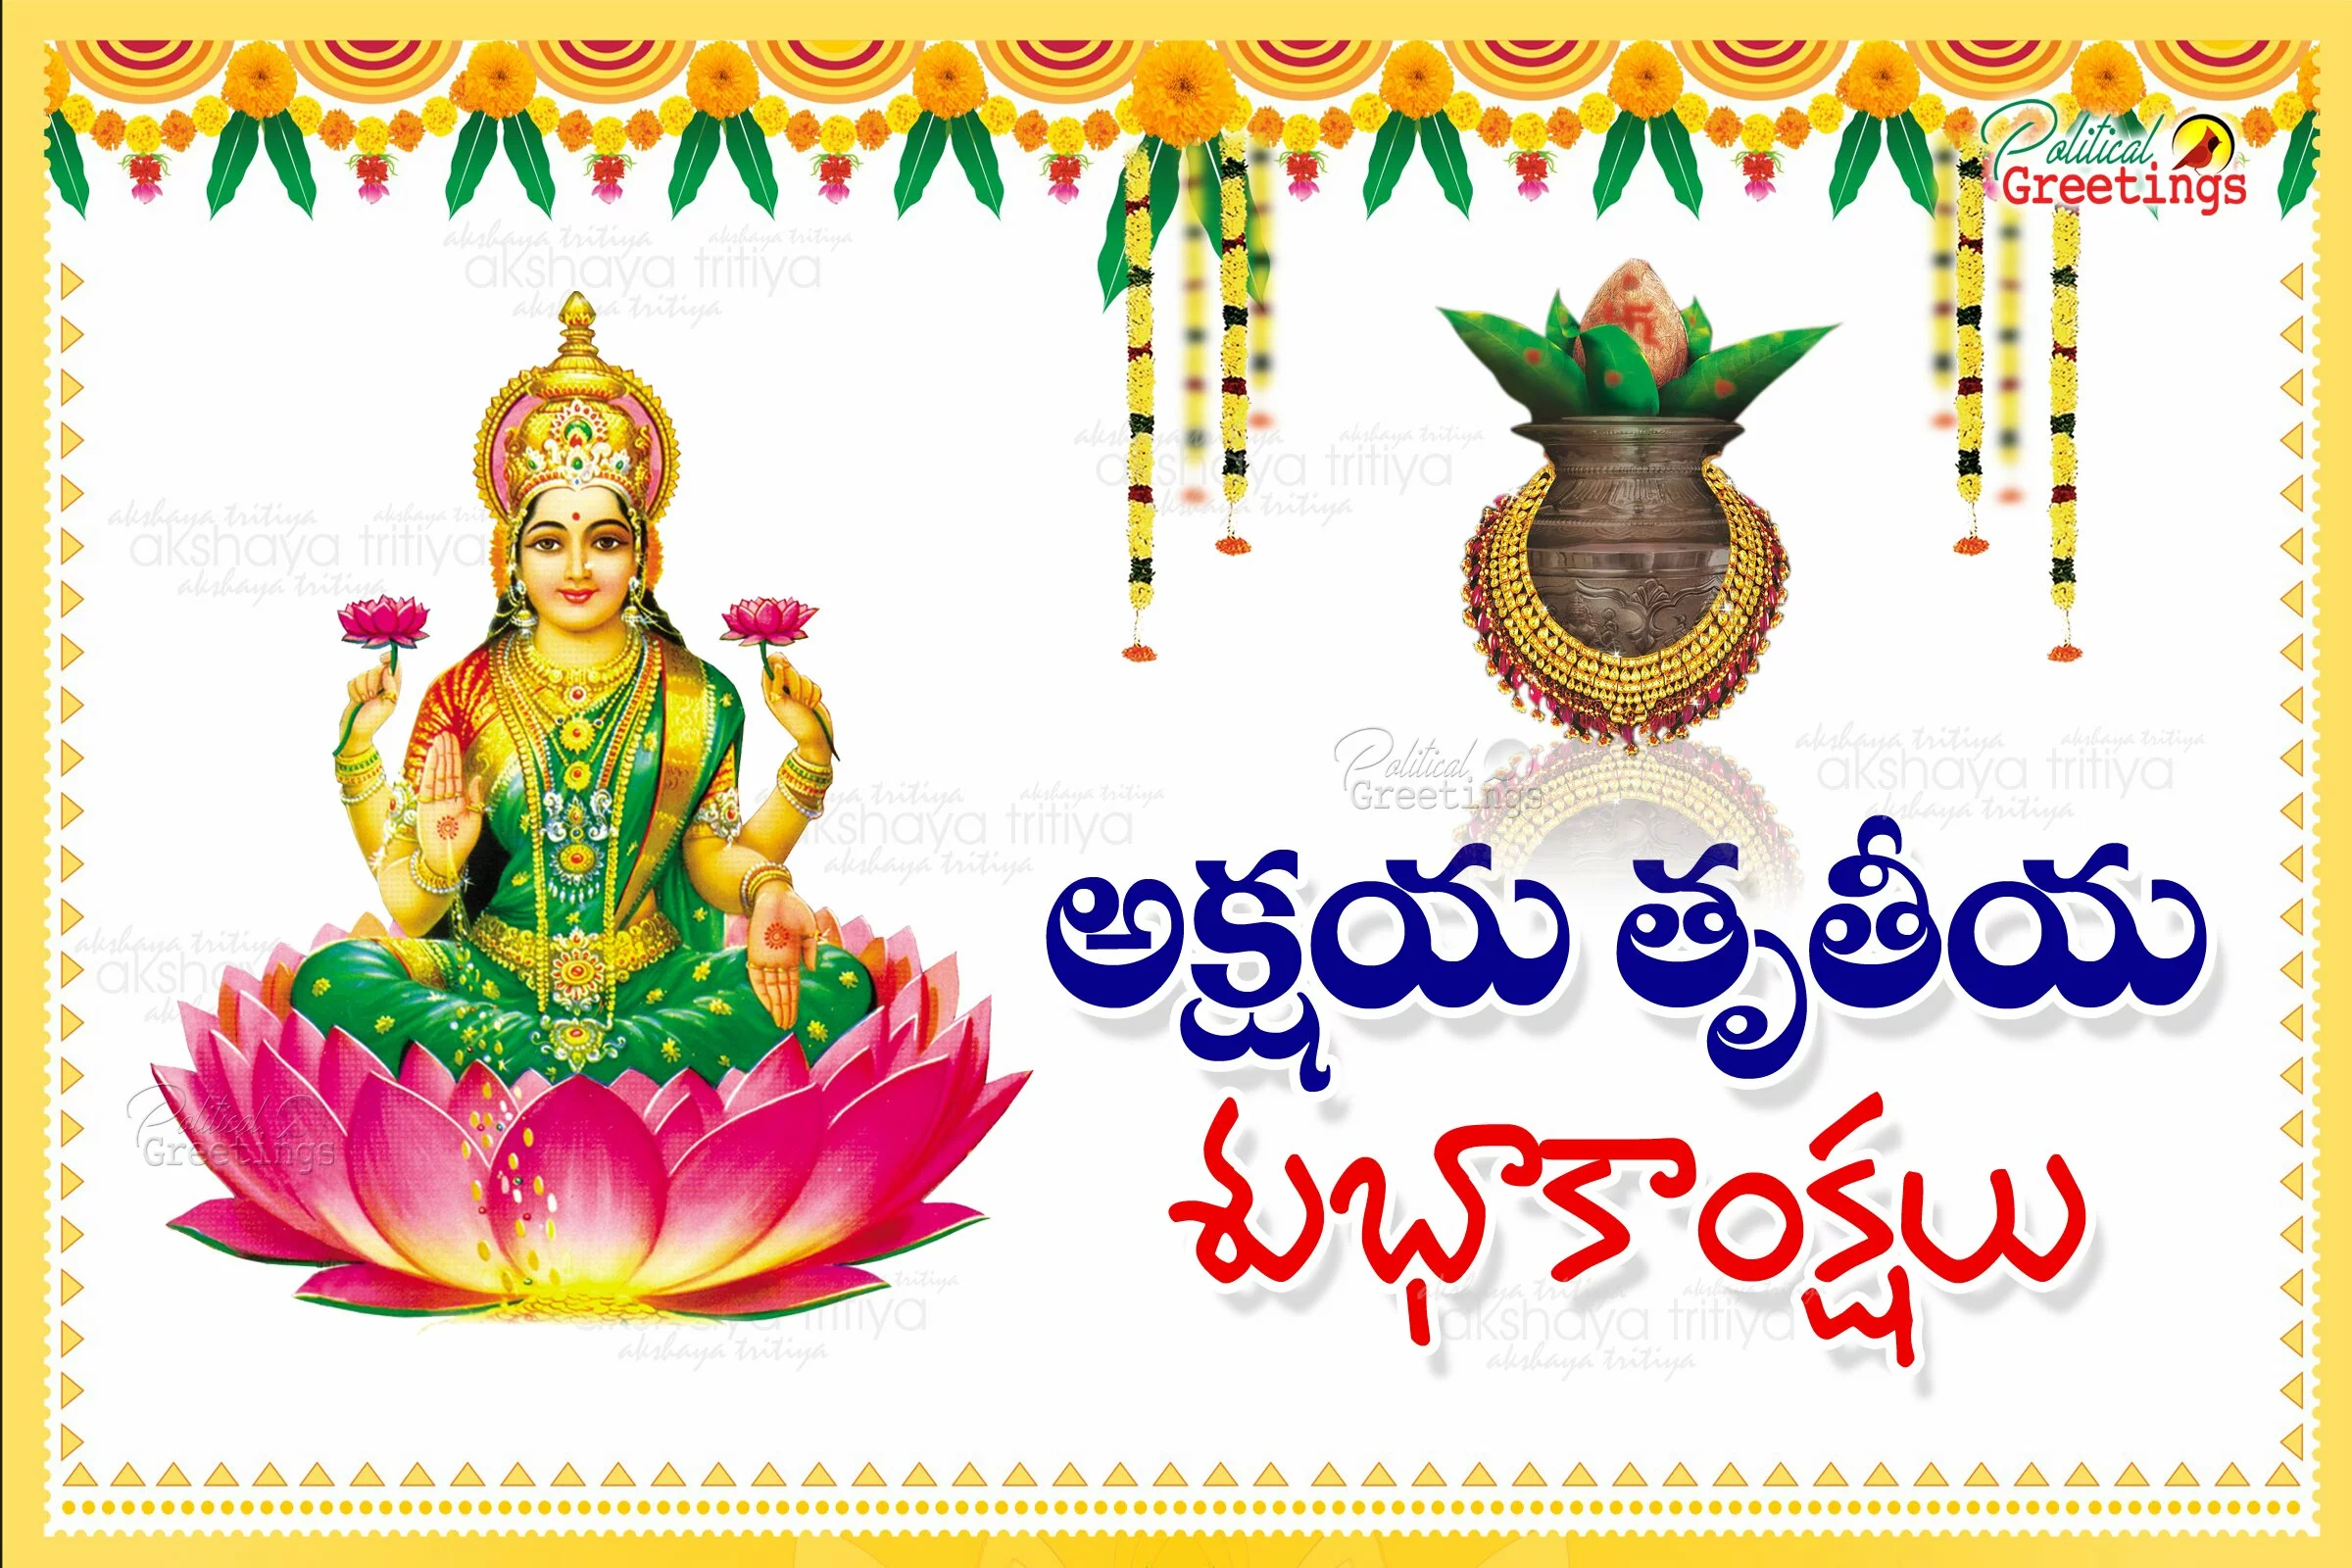 Akshaya Tritiya Telugu Quotes and Greetings wishes